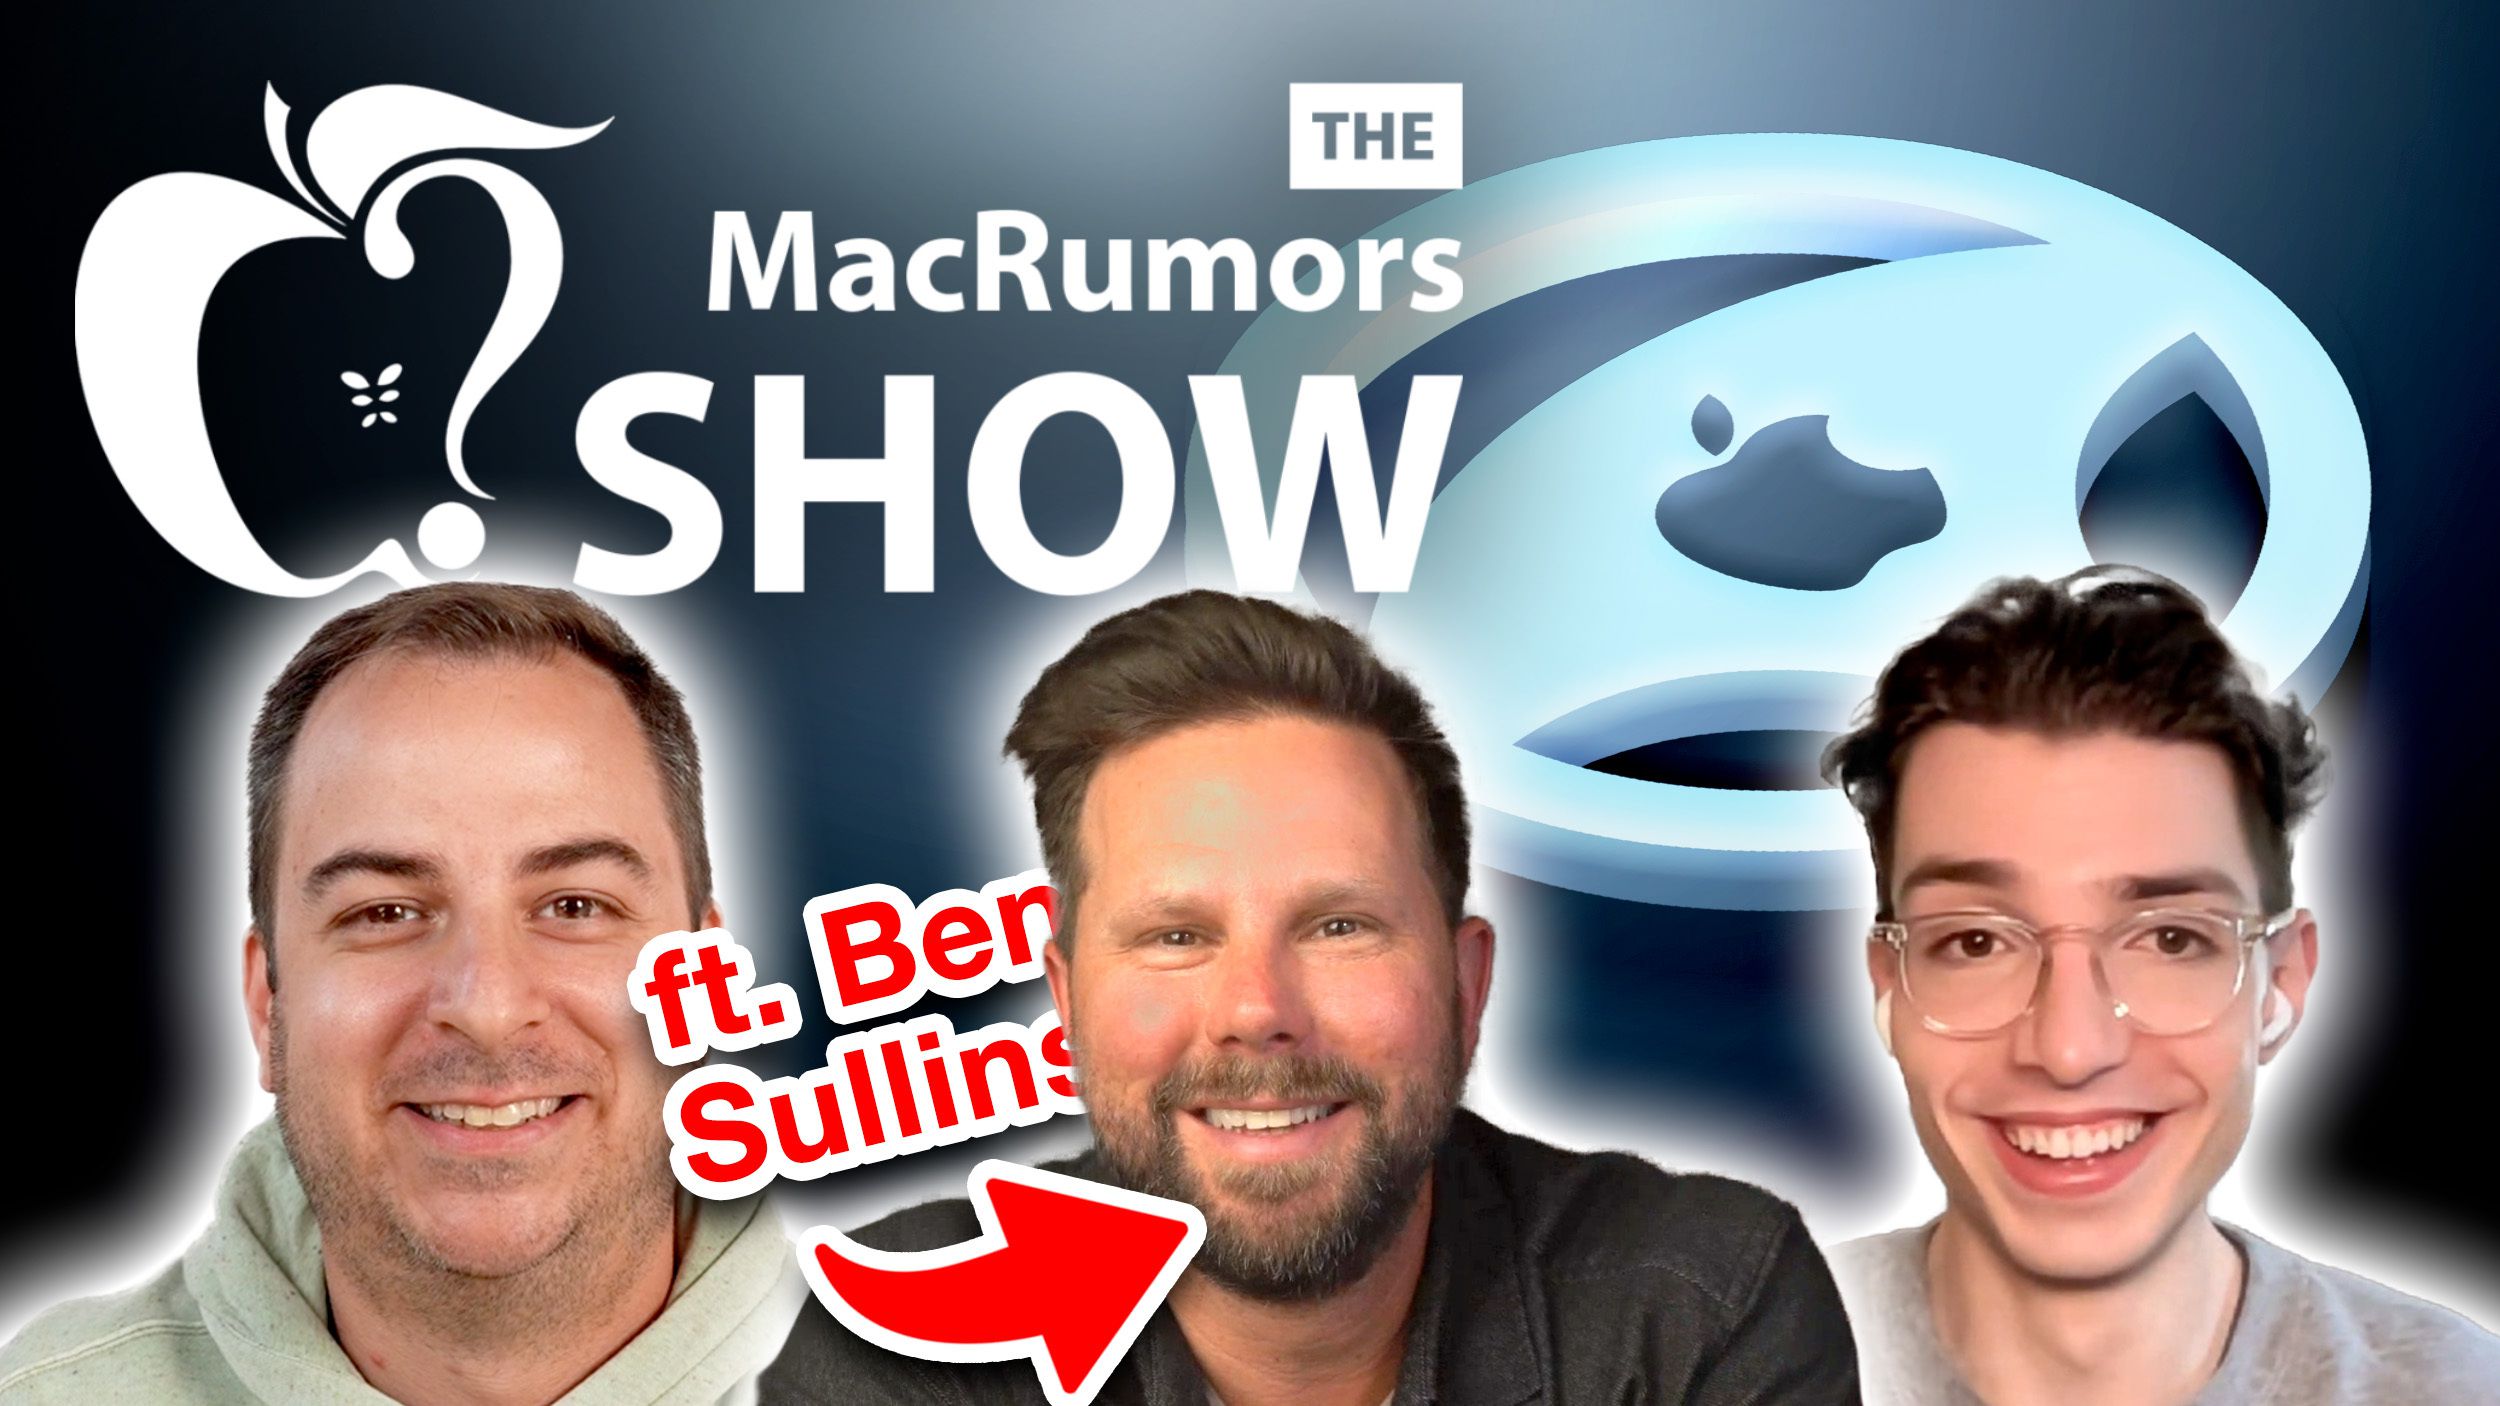 MacRumors Show: Ben Sullins opowiada o Apple Car